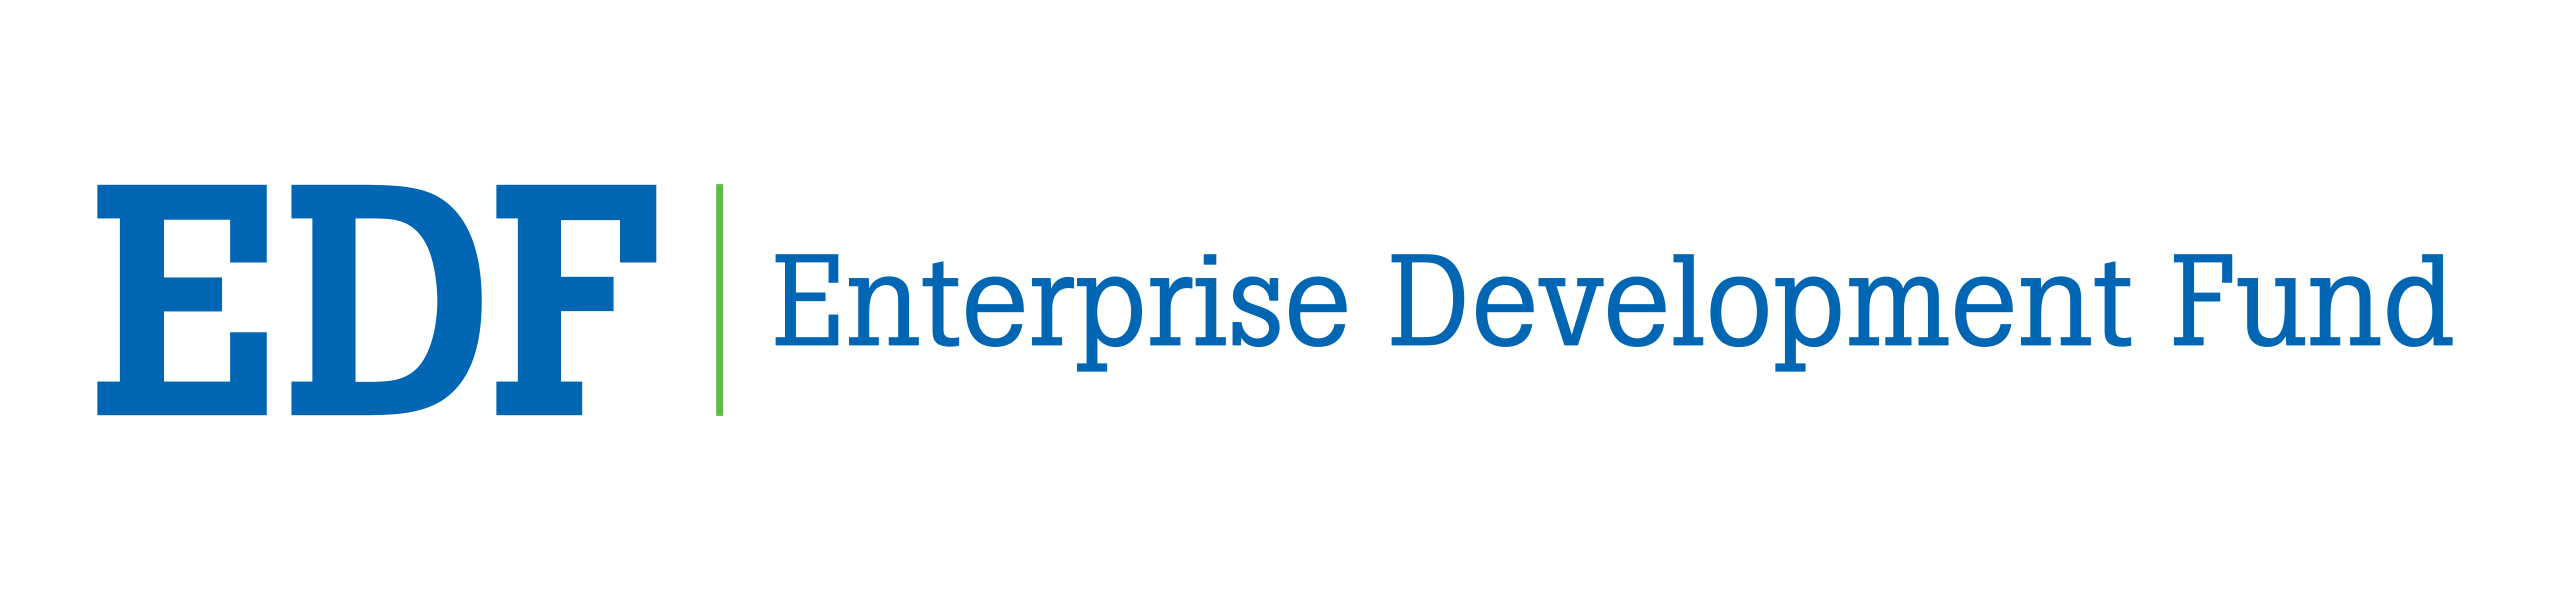 Enterprise Development Fund logo